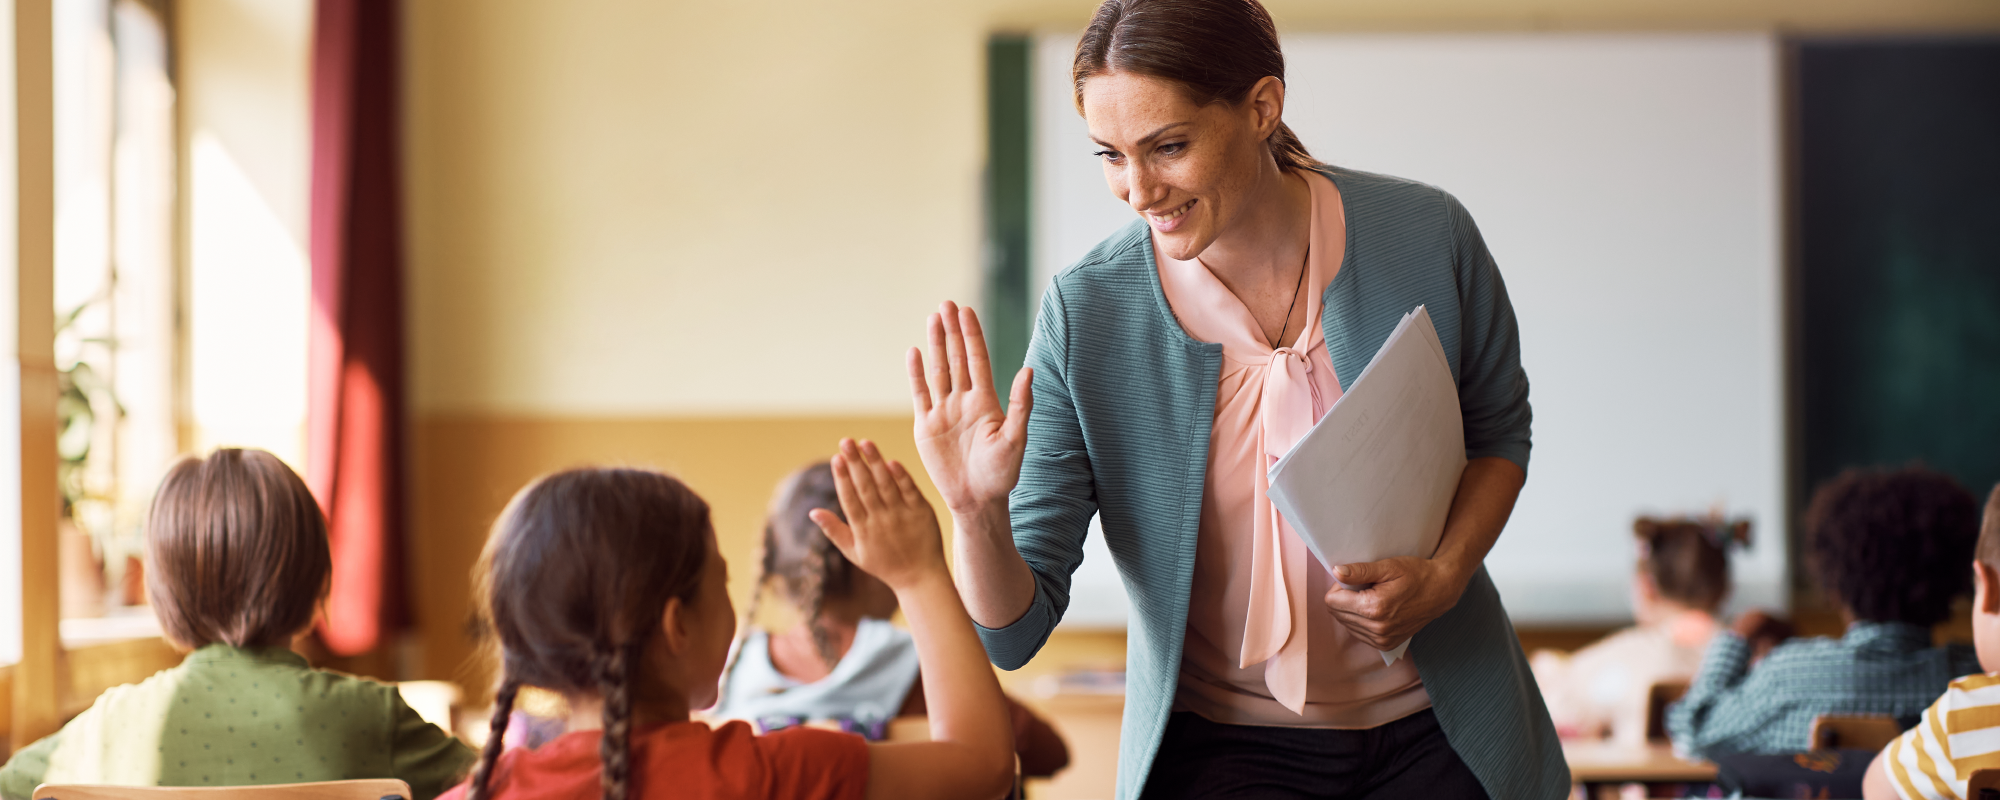 Teacher giving student a high five in classroom